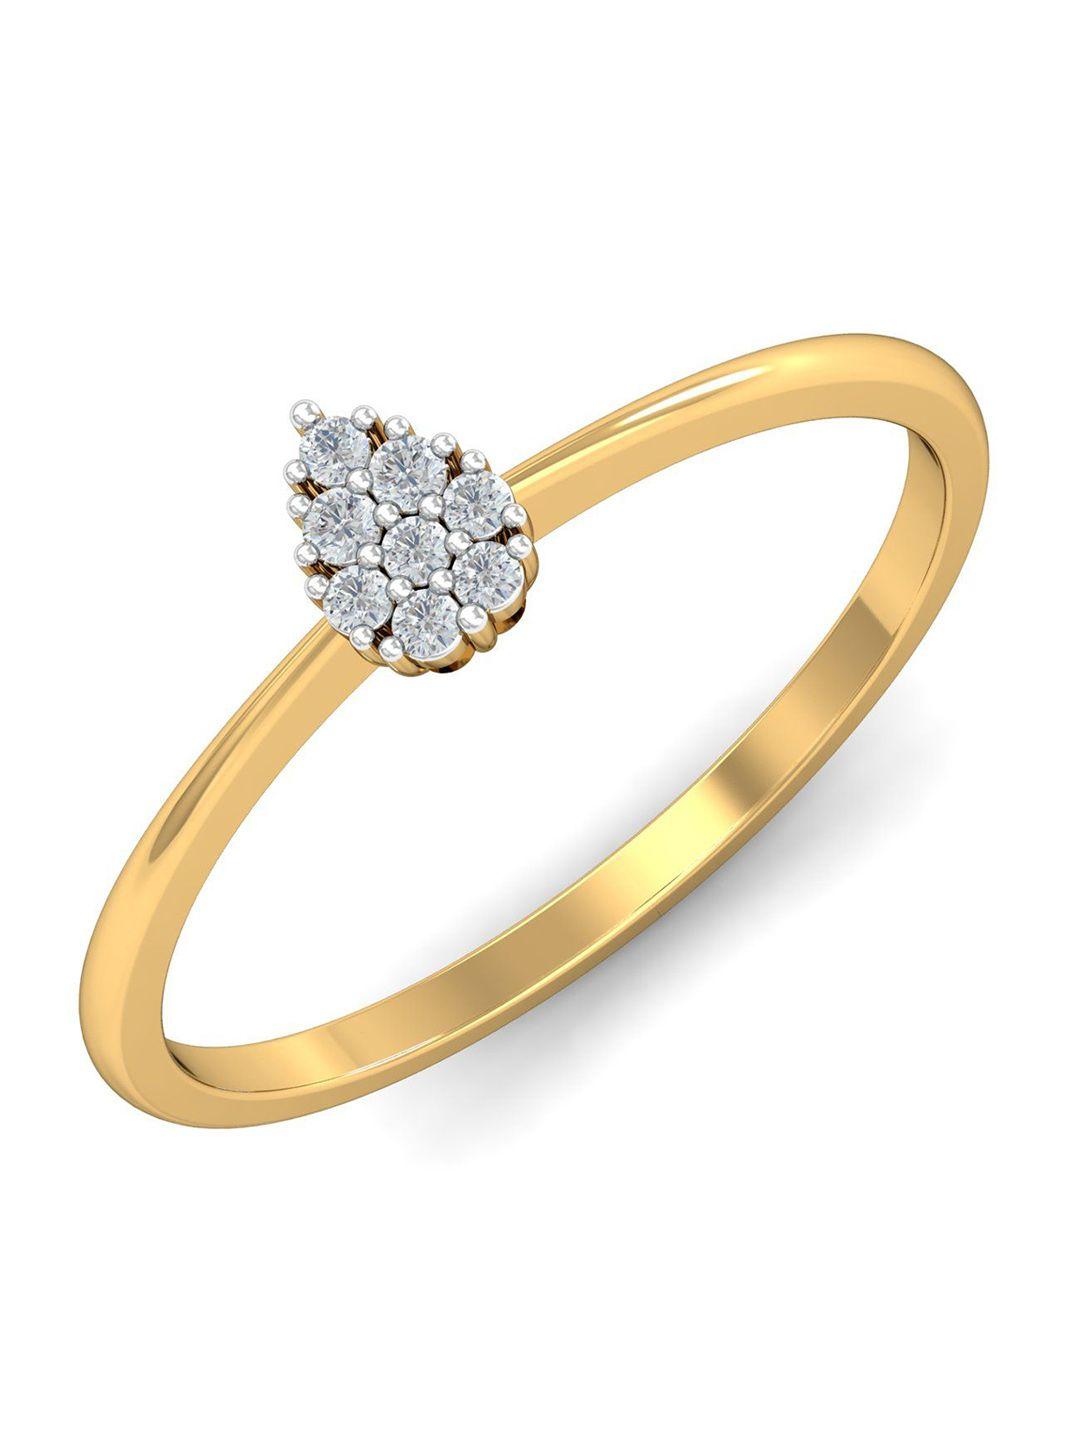 kuberbox sophisticatedly 18kt gold diamond studded finger ring- 1.53gm